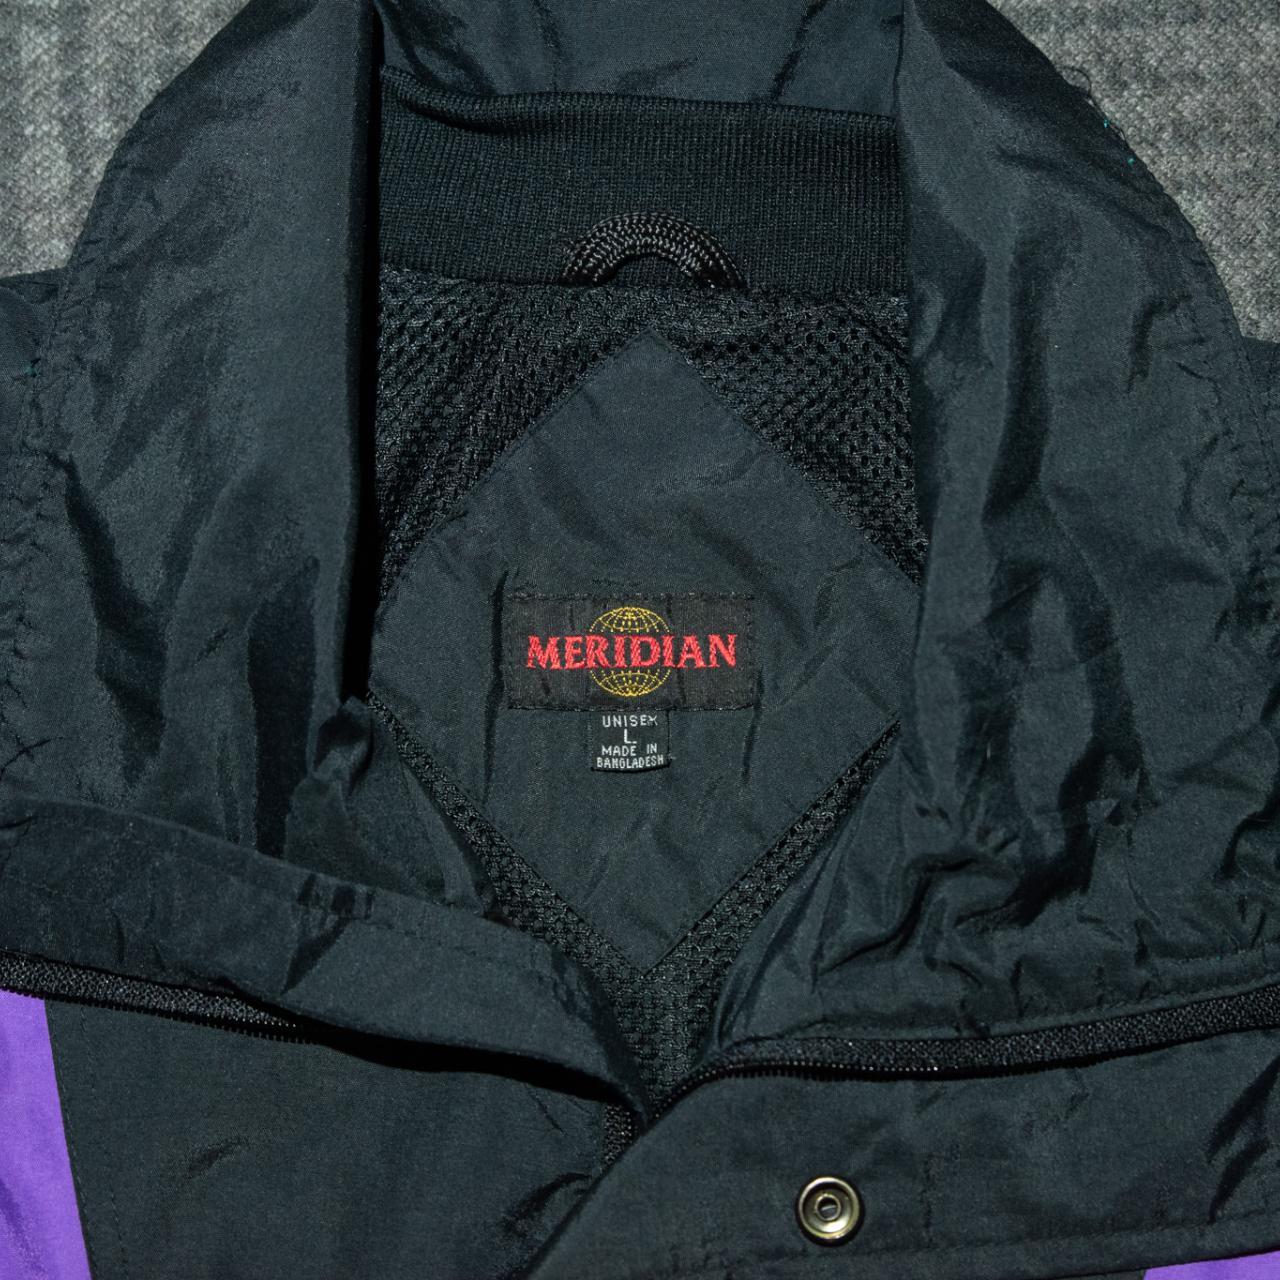 Meridian Jacket Excellent Condition - Depop